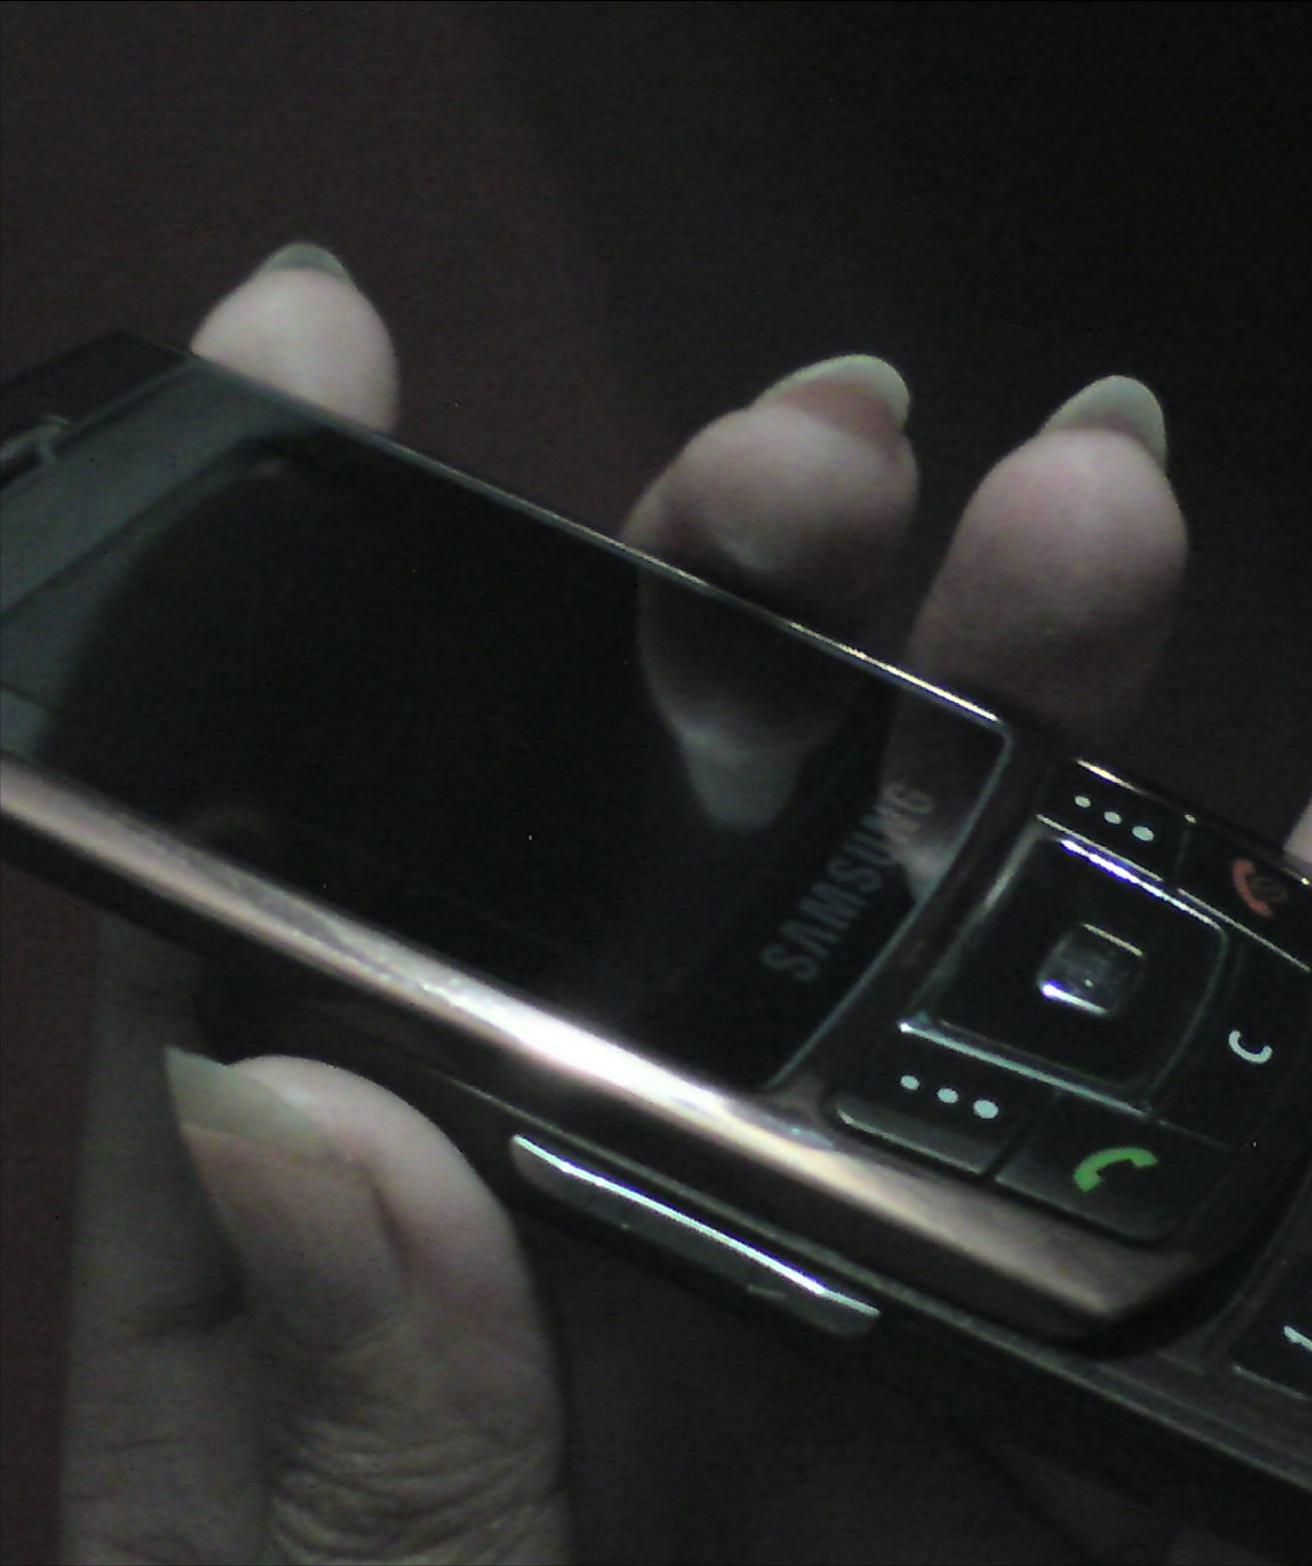 Samsung D990i new.original pic given large image 0